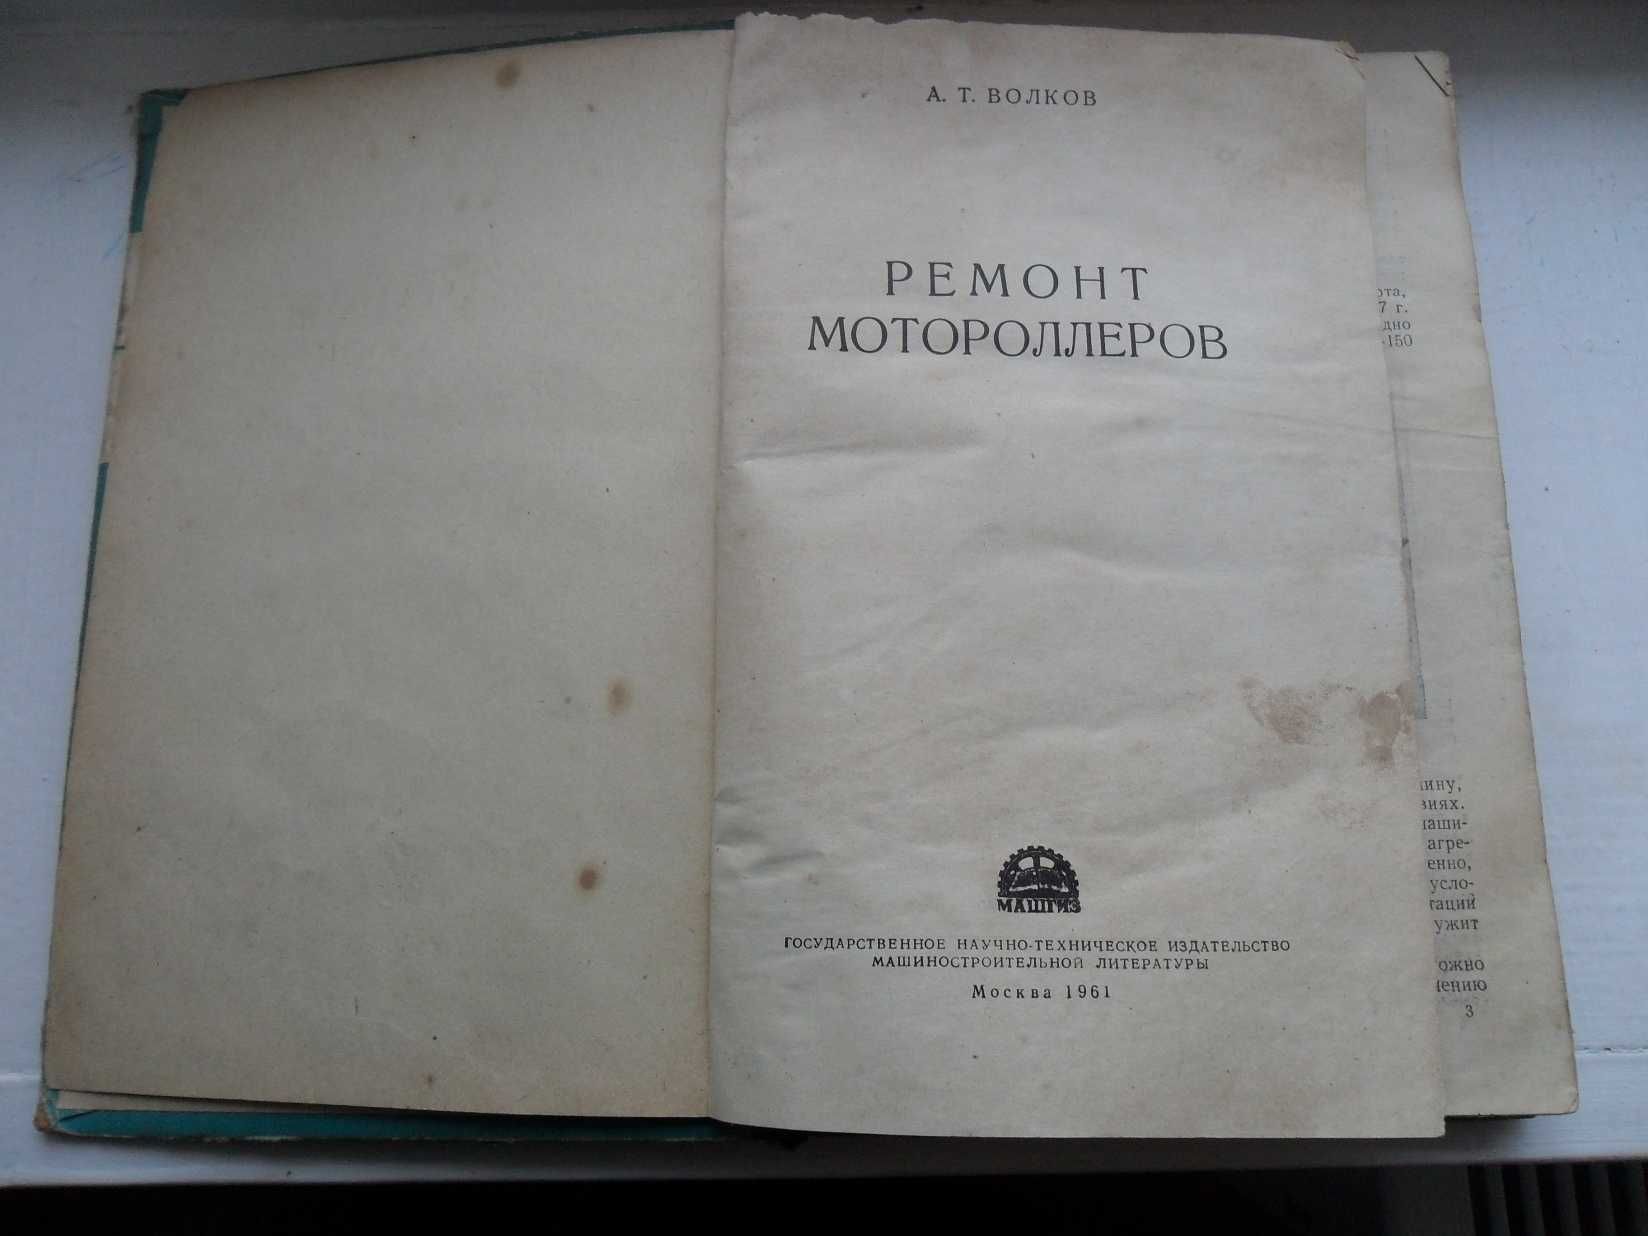 Книга "Ремонт мотороллеров" автора А.Т.Волкова,издания Москва 1961 г.